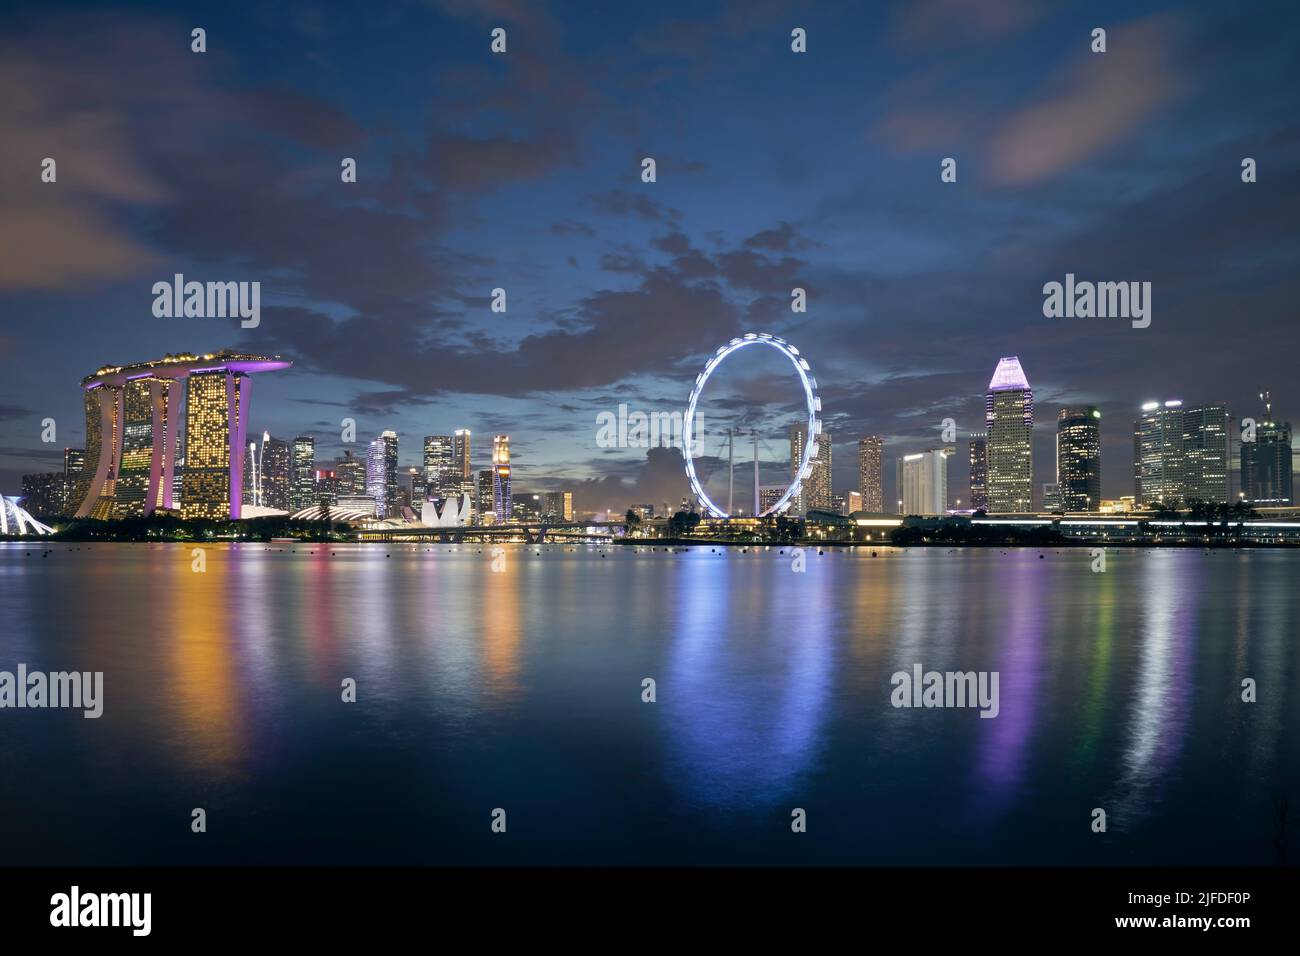 Cityscape of illuminated modern city at night. Urban skyline of Singapore. Stock Photo